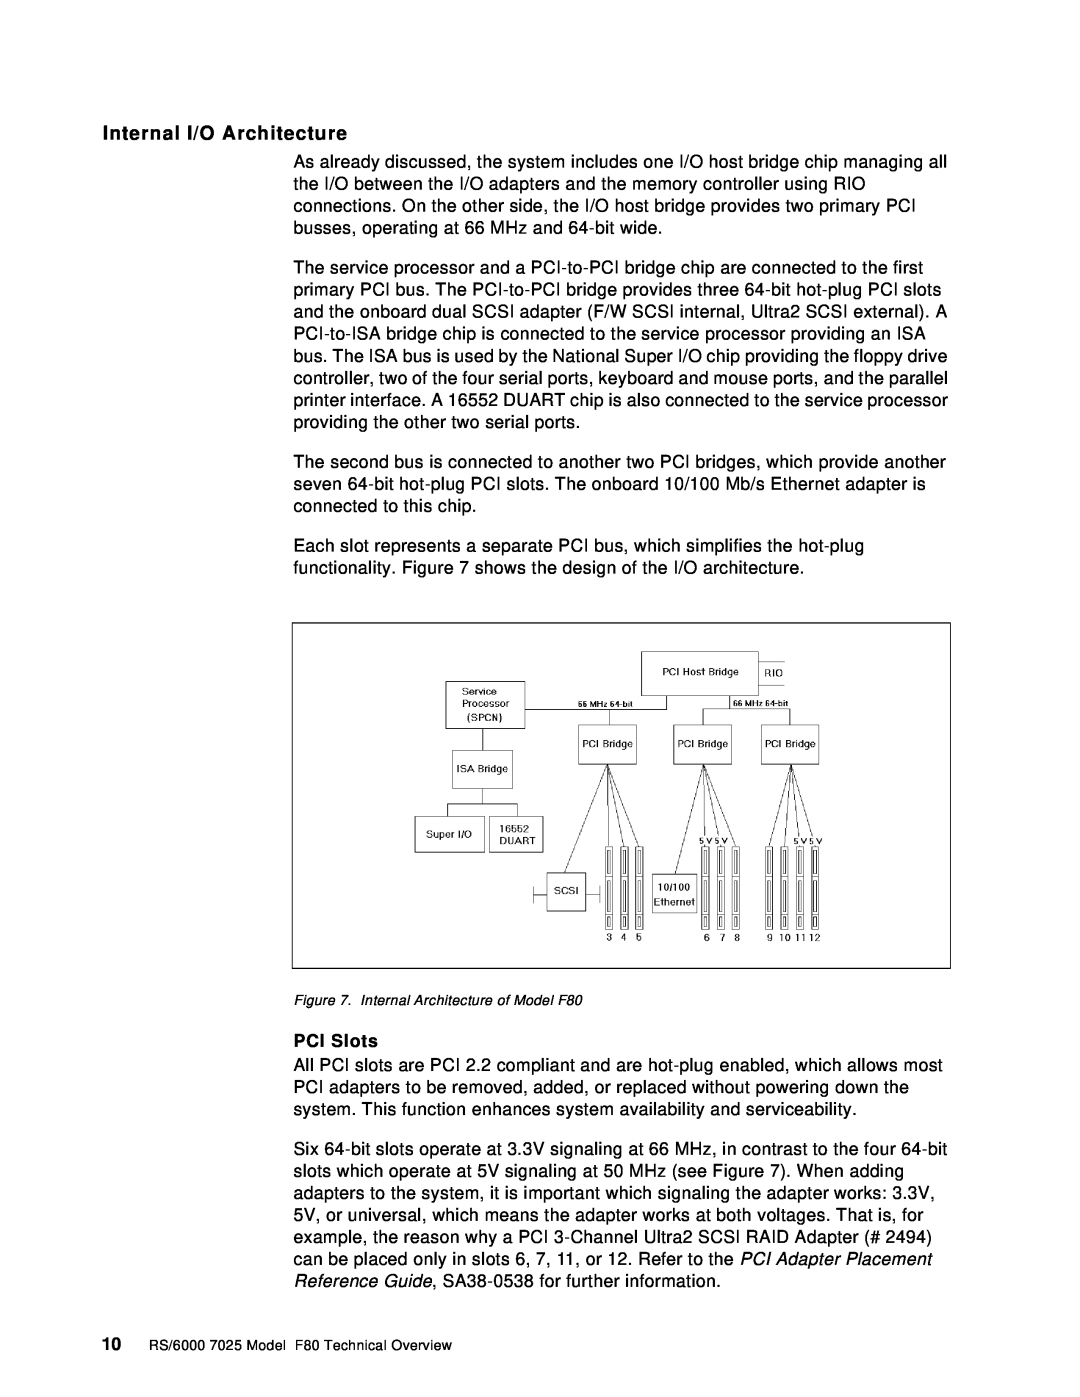 IBM F80 manual Internal I/O Architecture, PCI Slots 